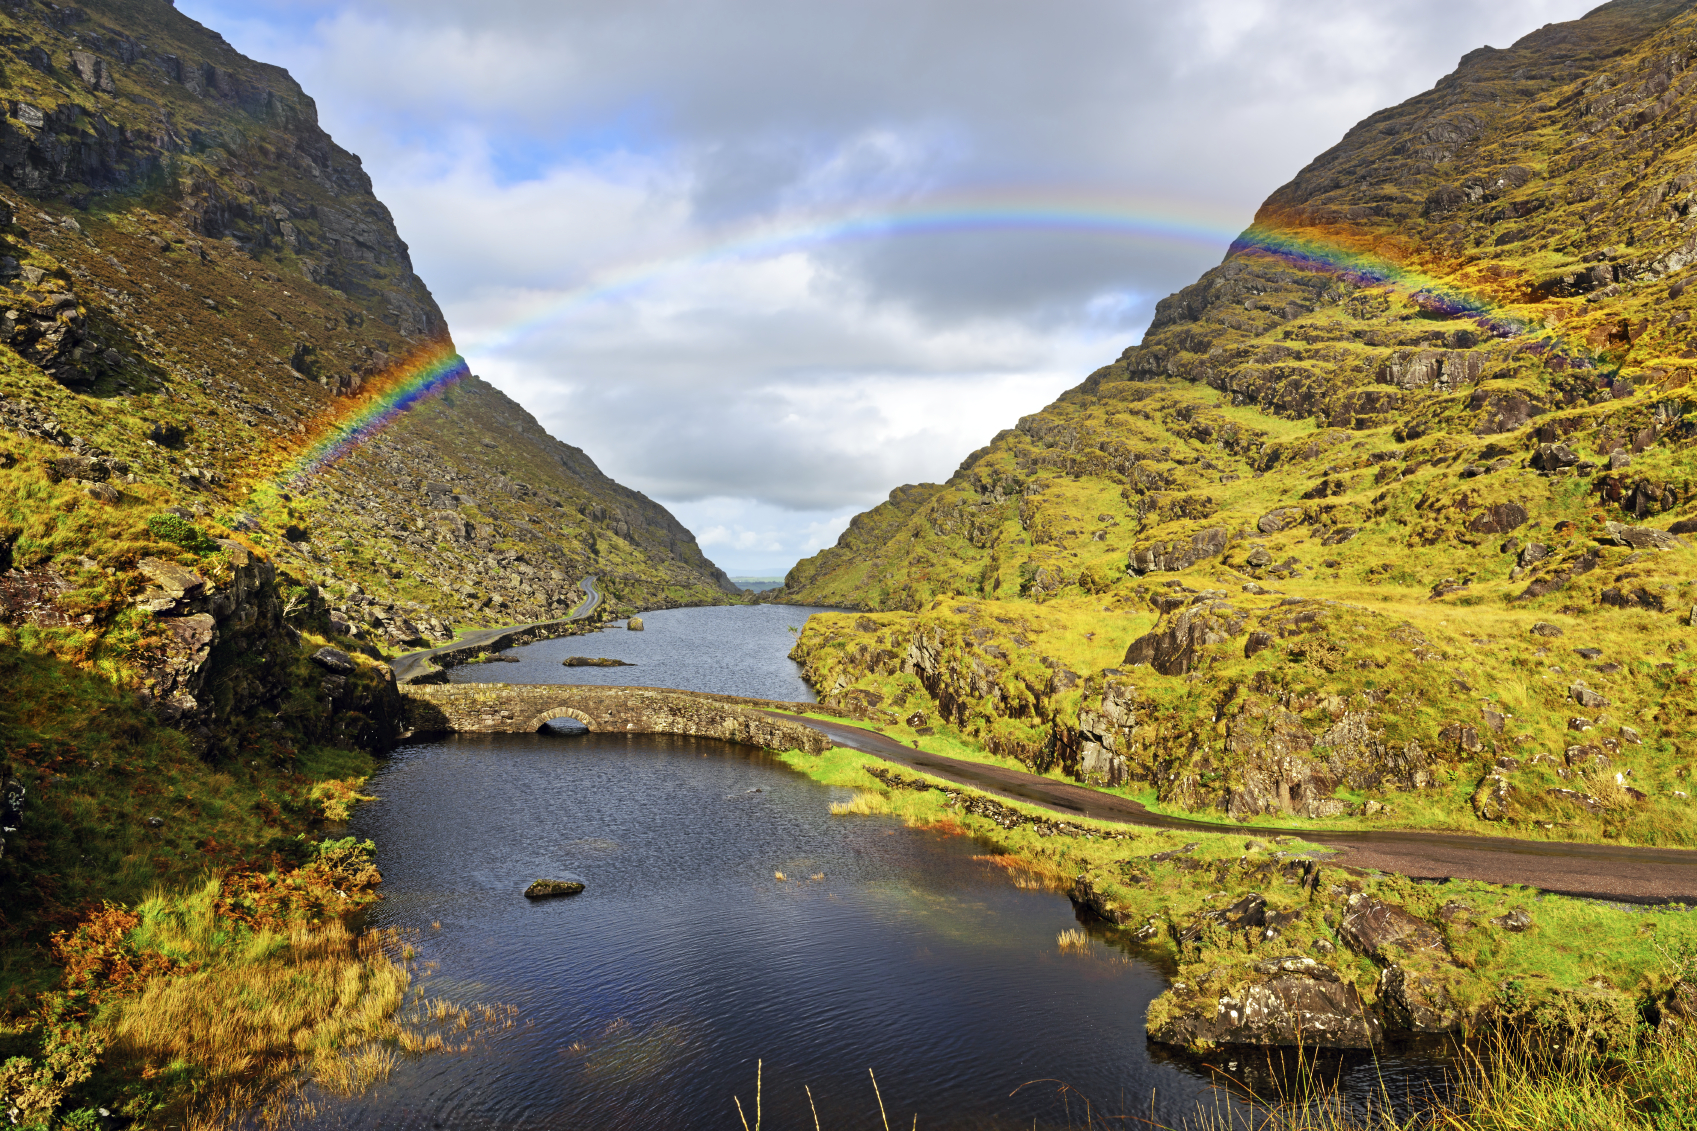 Rainbow over bridge and lake in the Gap of Dunloe, County Kerry, Ireland. Picturesque mountainous landscape. (Courtesy ©iStock.com/stevegeer)